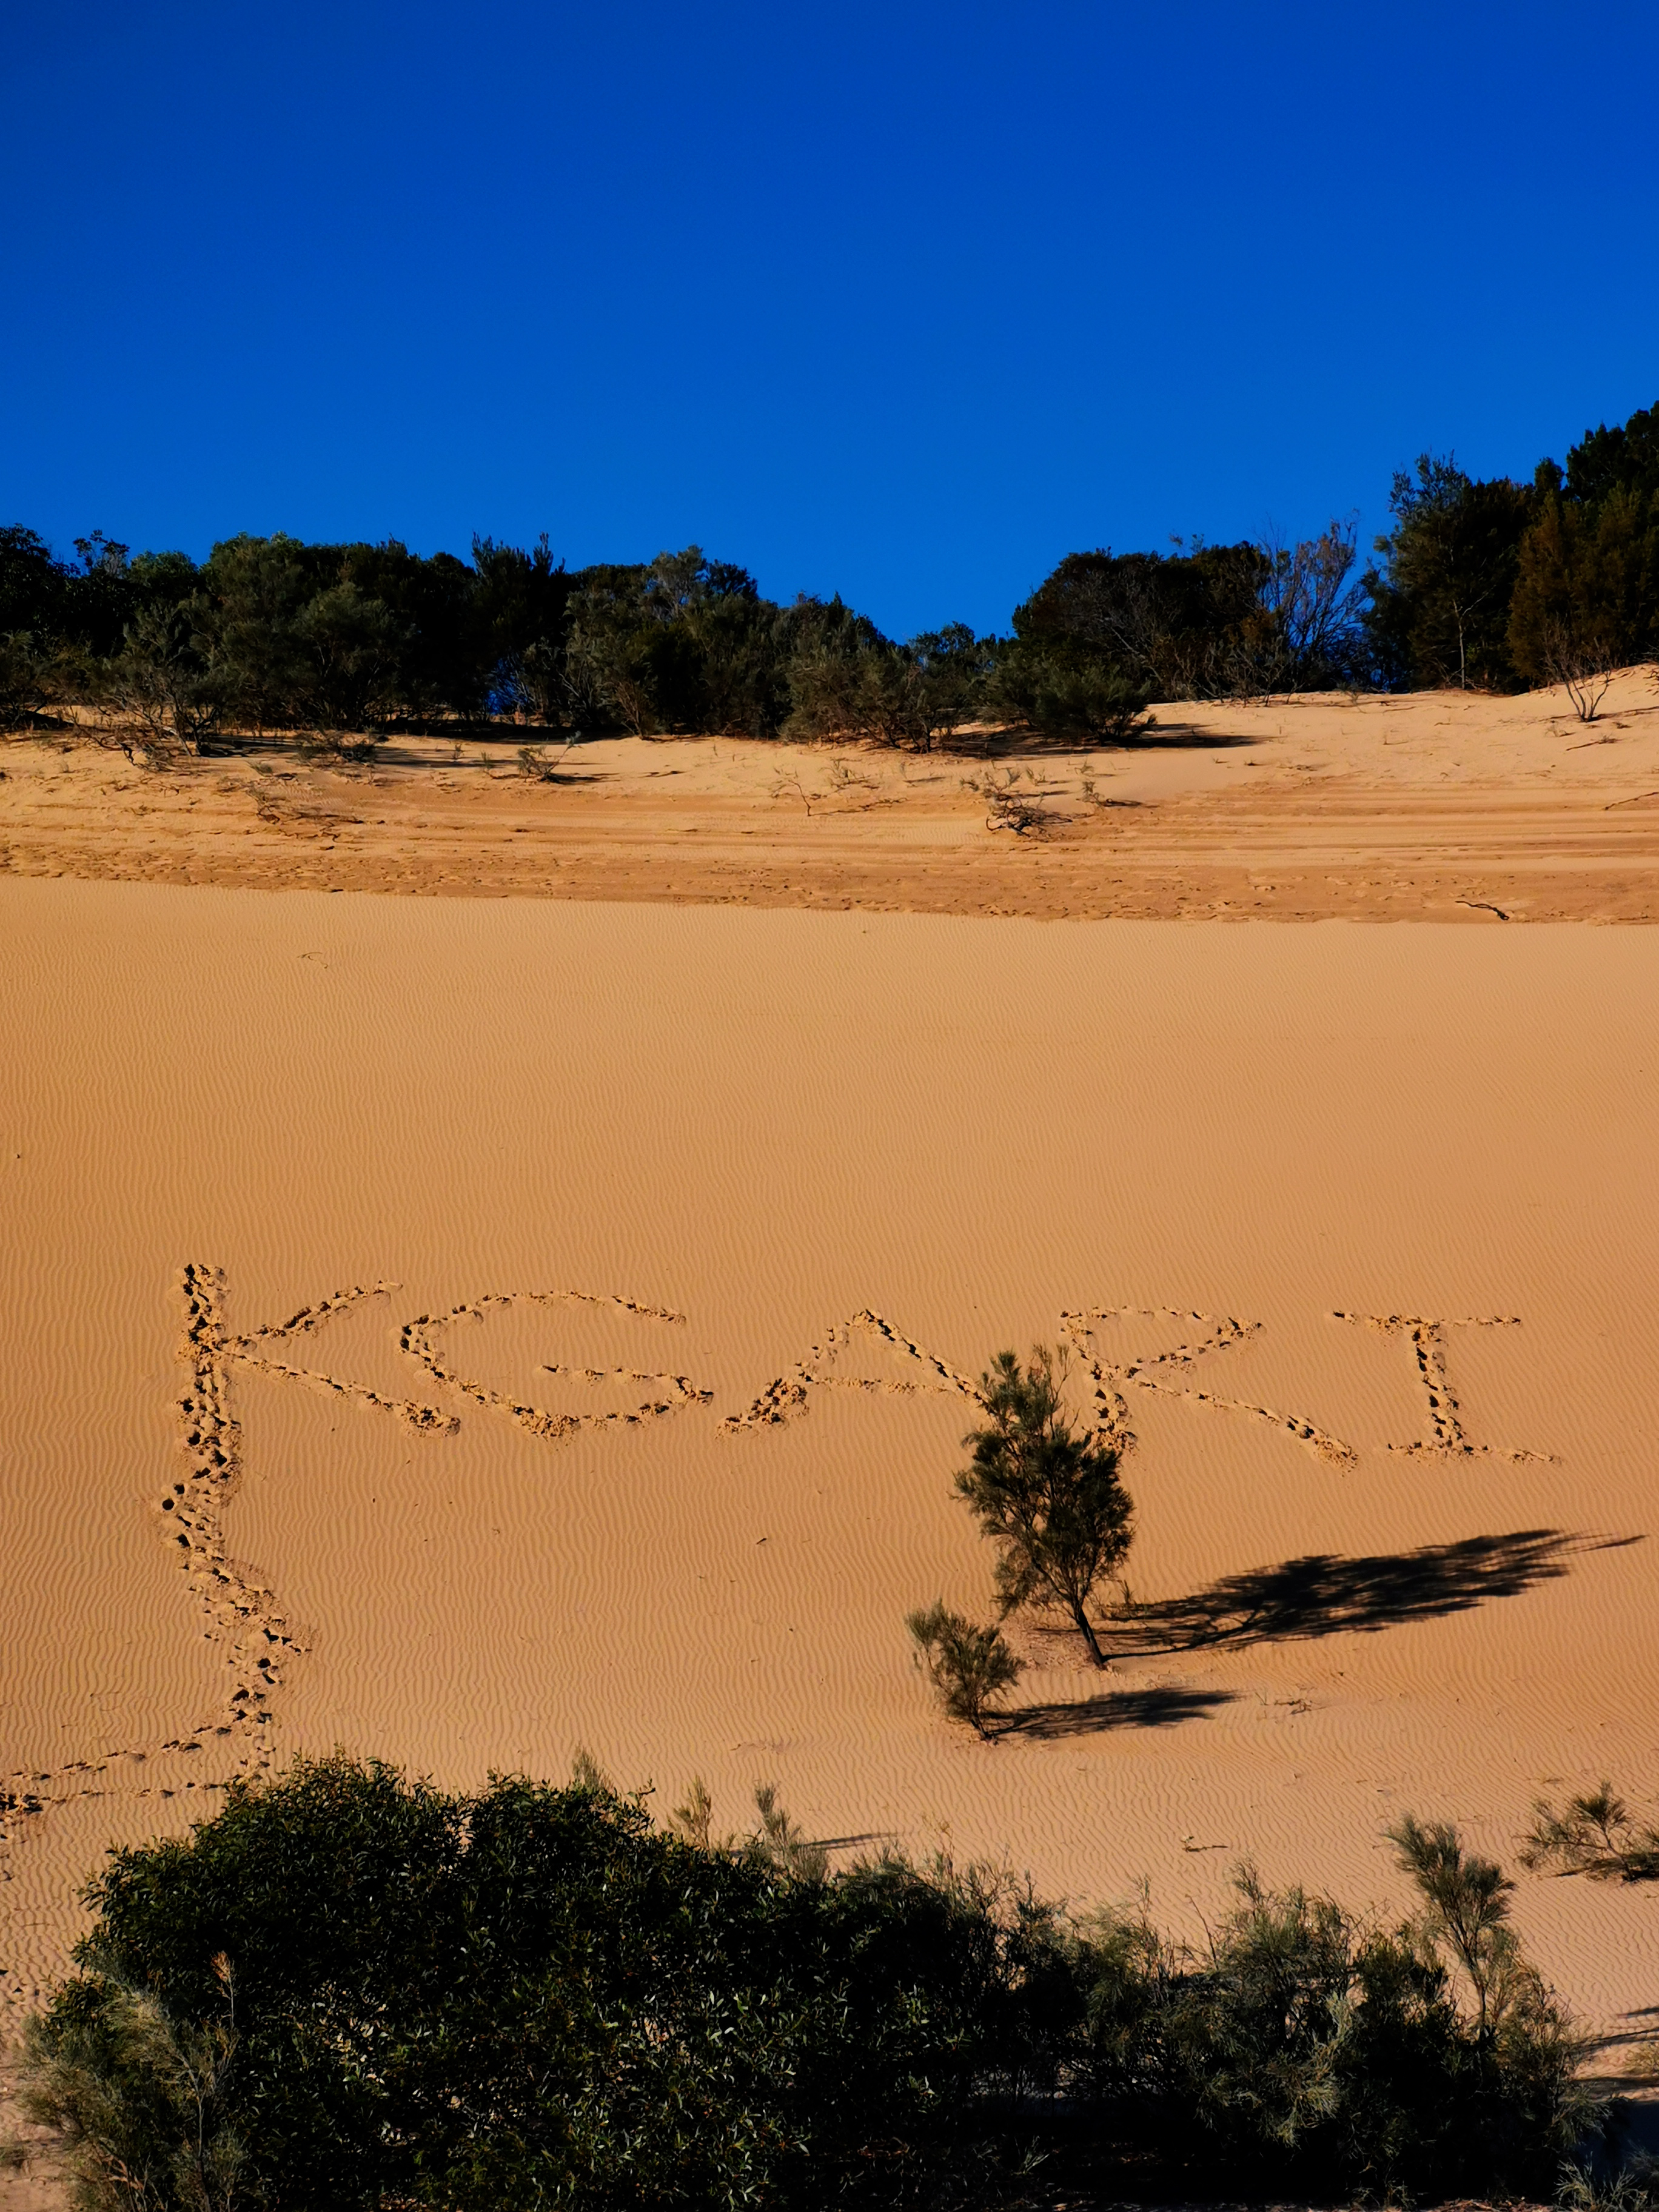 K'gari written in the sand dunes 